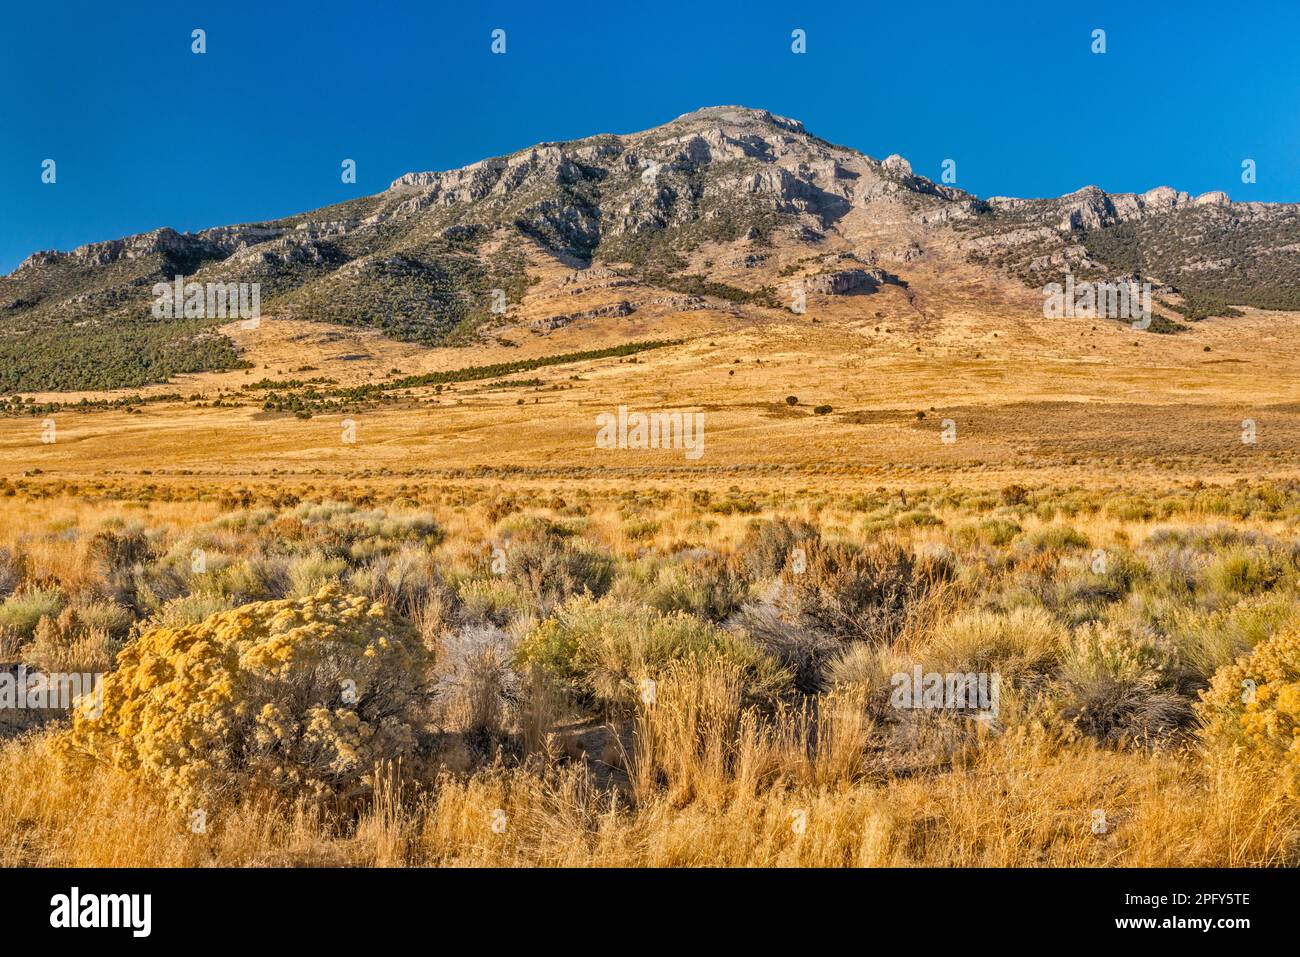 Dutch John Mountain, rabbitbush, sagebrush, Indian ricegrass, view from Great Basin Highway (US 93), Lake Valley, Great Basin, Nevada, USA Stock Photo